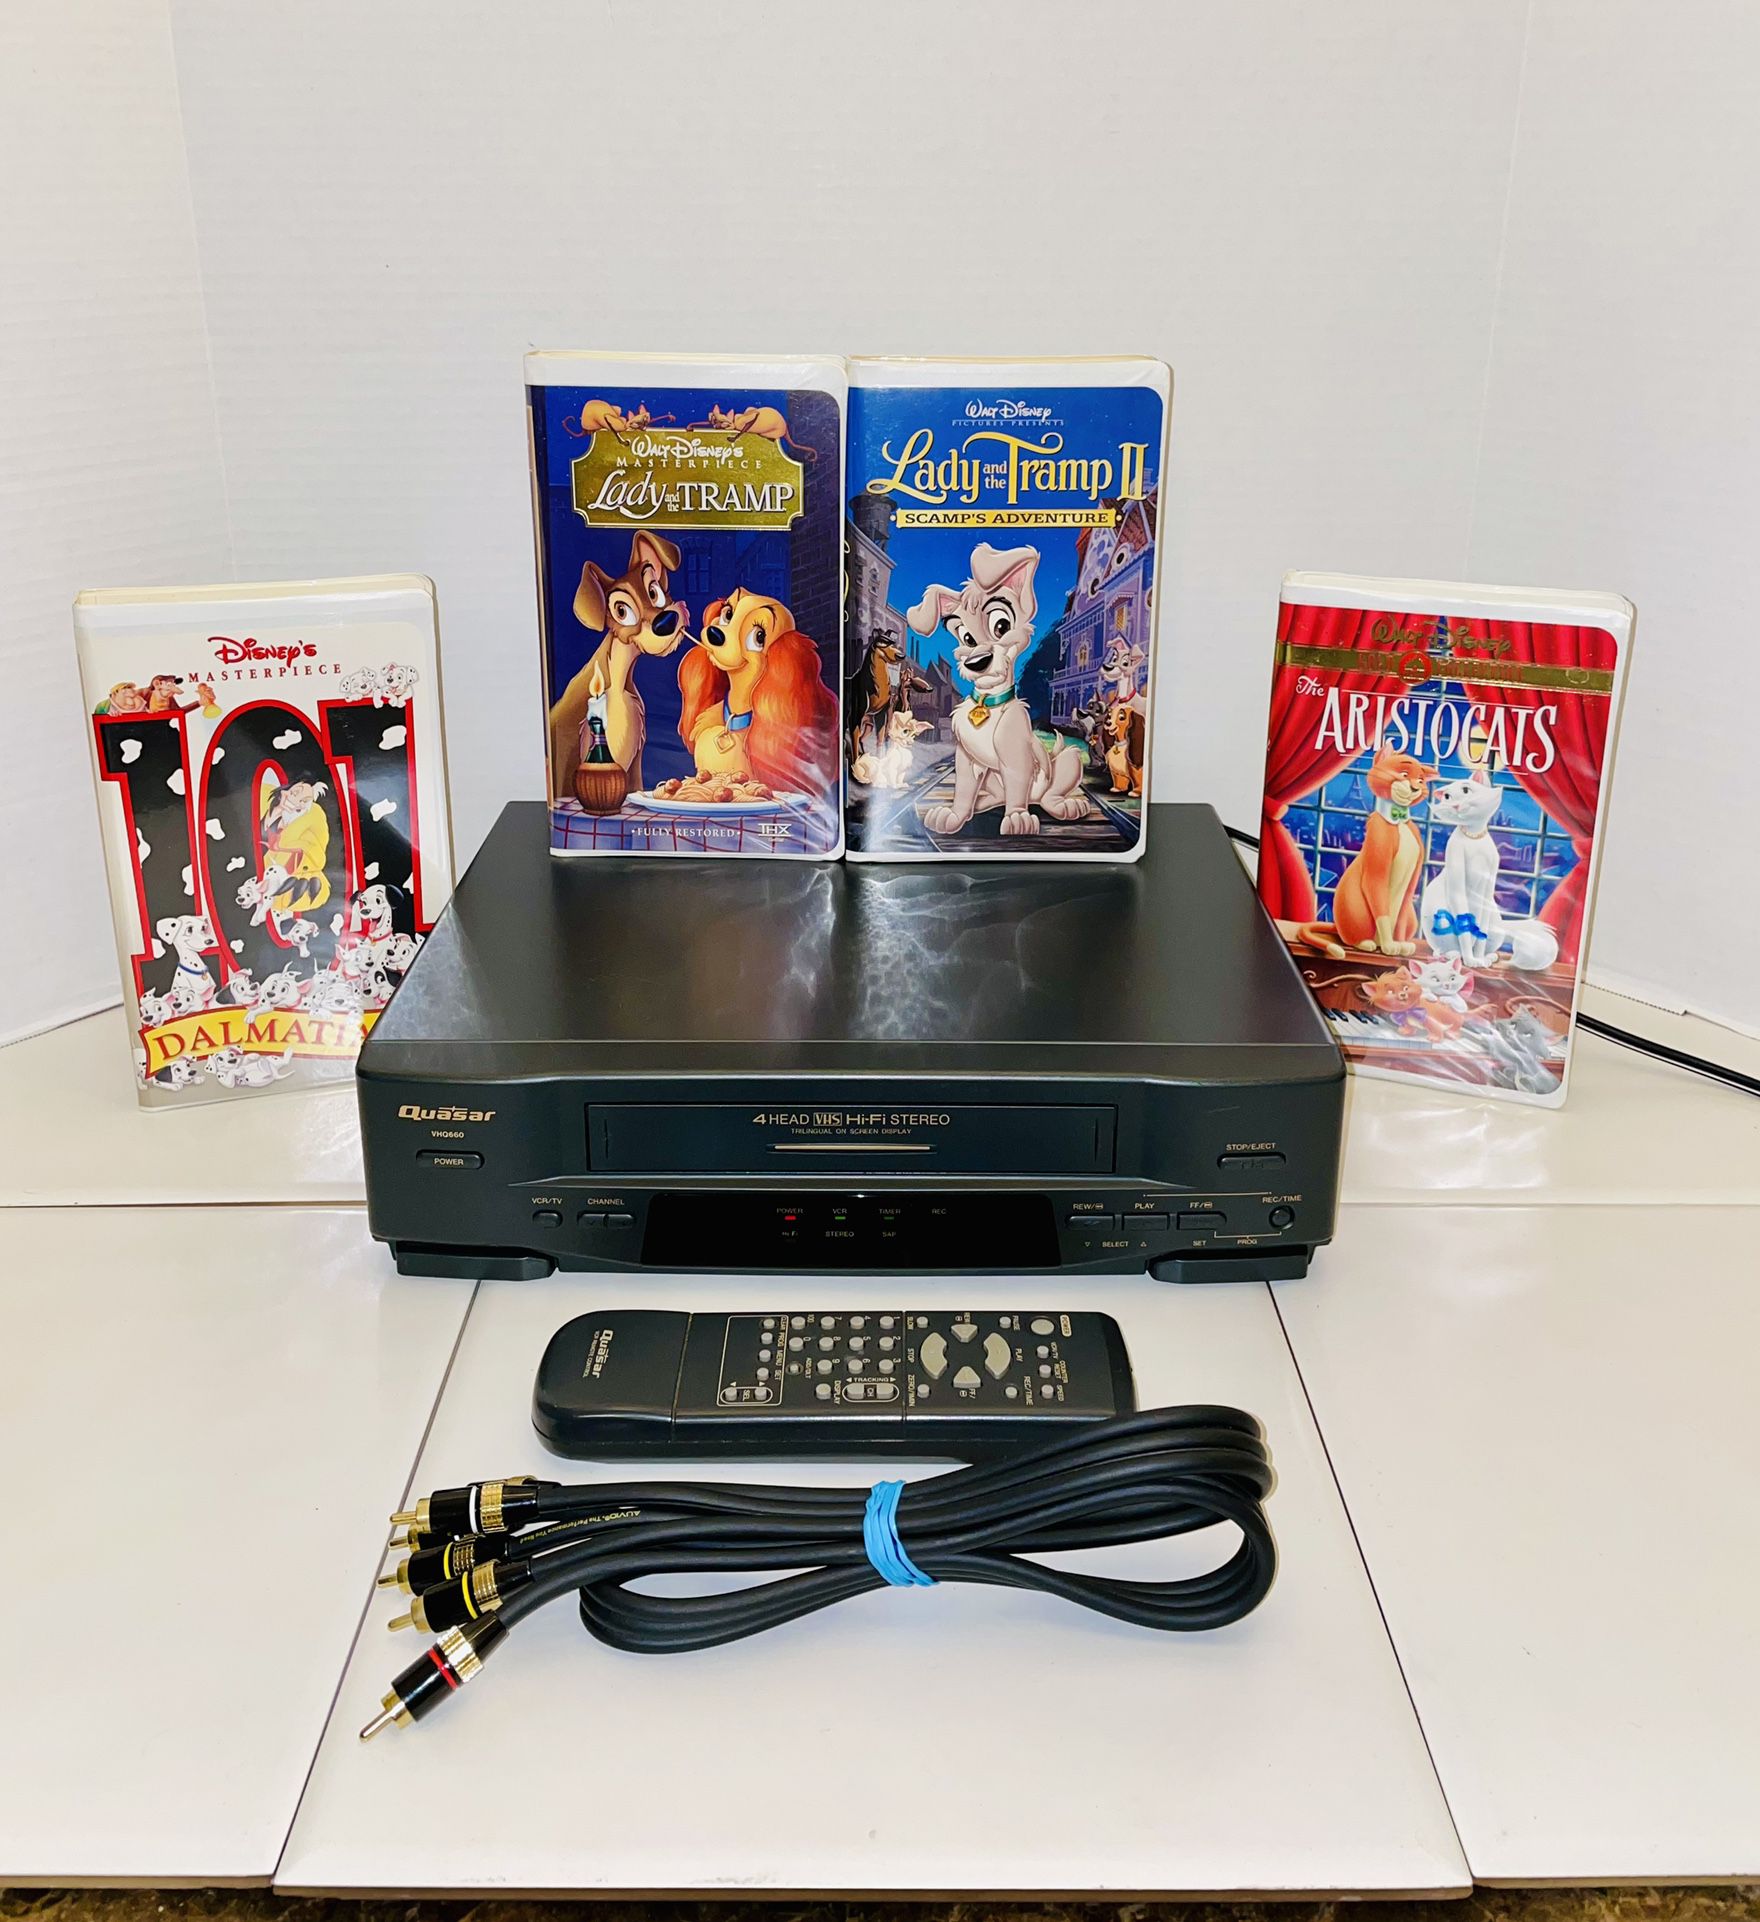 Quasar VHQ660 MINT CONDITION 4-Head HI-FI Stereo VCR VHS Player Recorder Bundle With Disney VHS Movies 